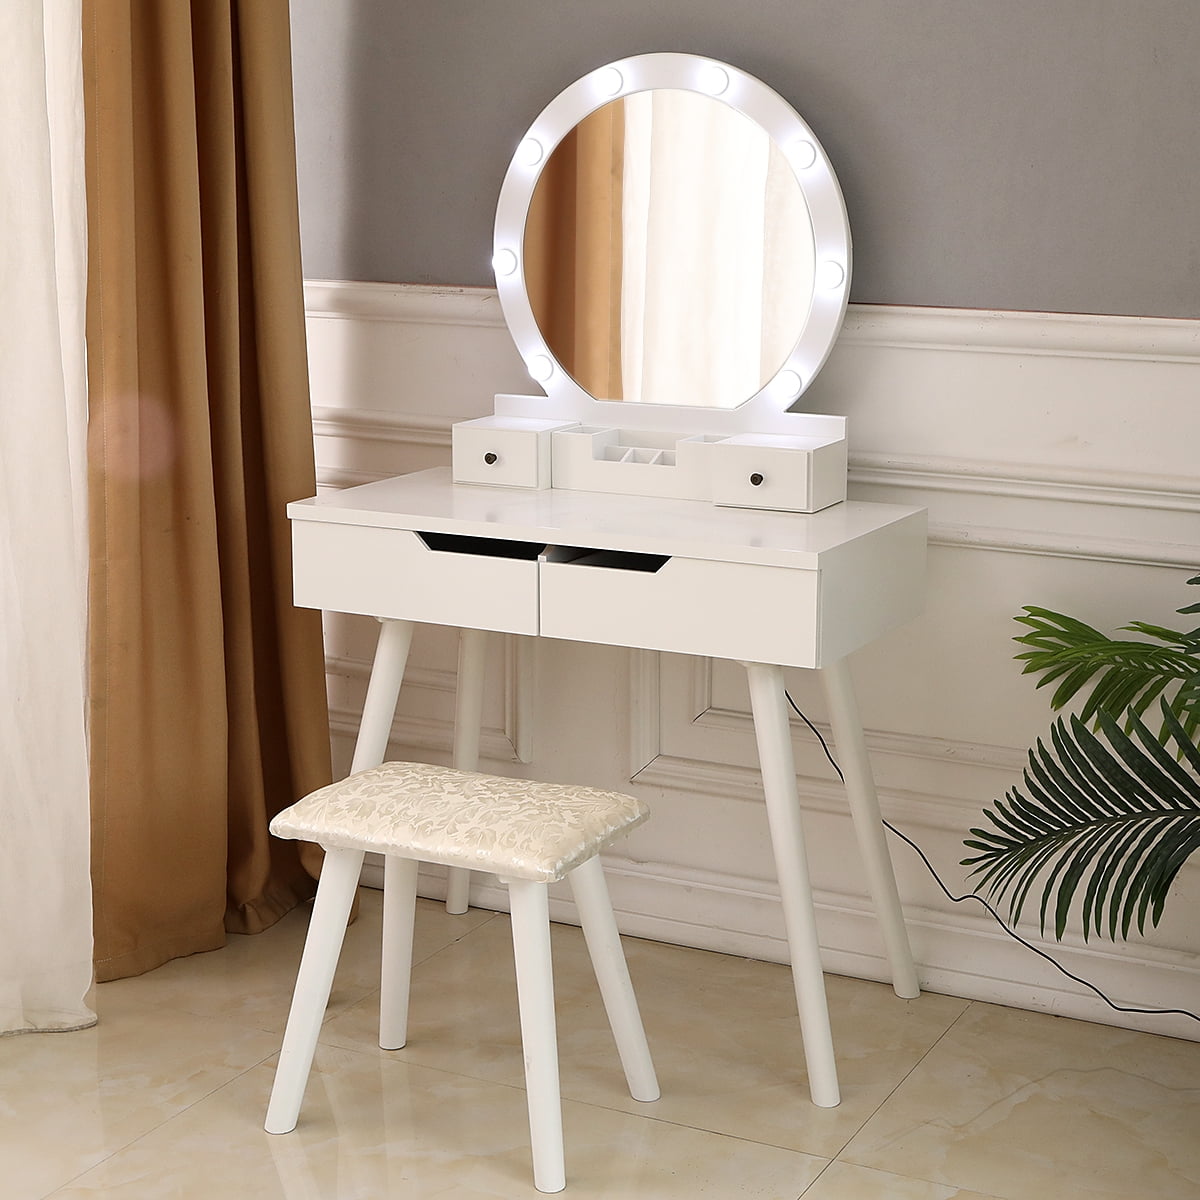 Ktaxon Vanity Set With Round Lighted, Mirror Bedroom Vanity